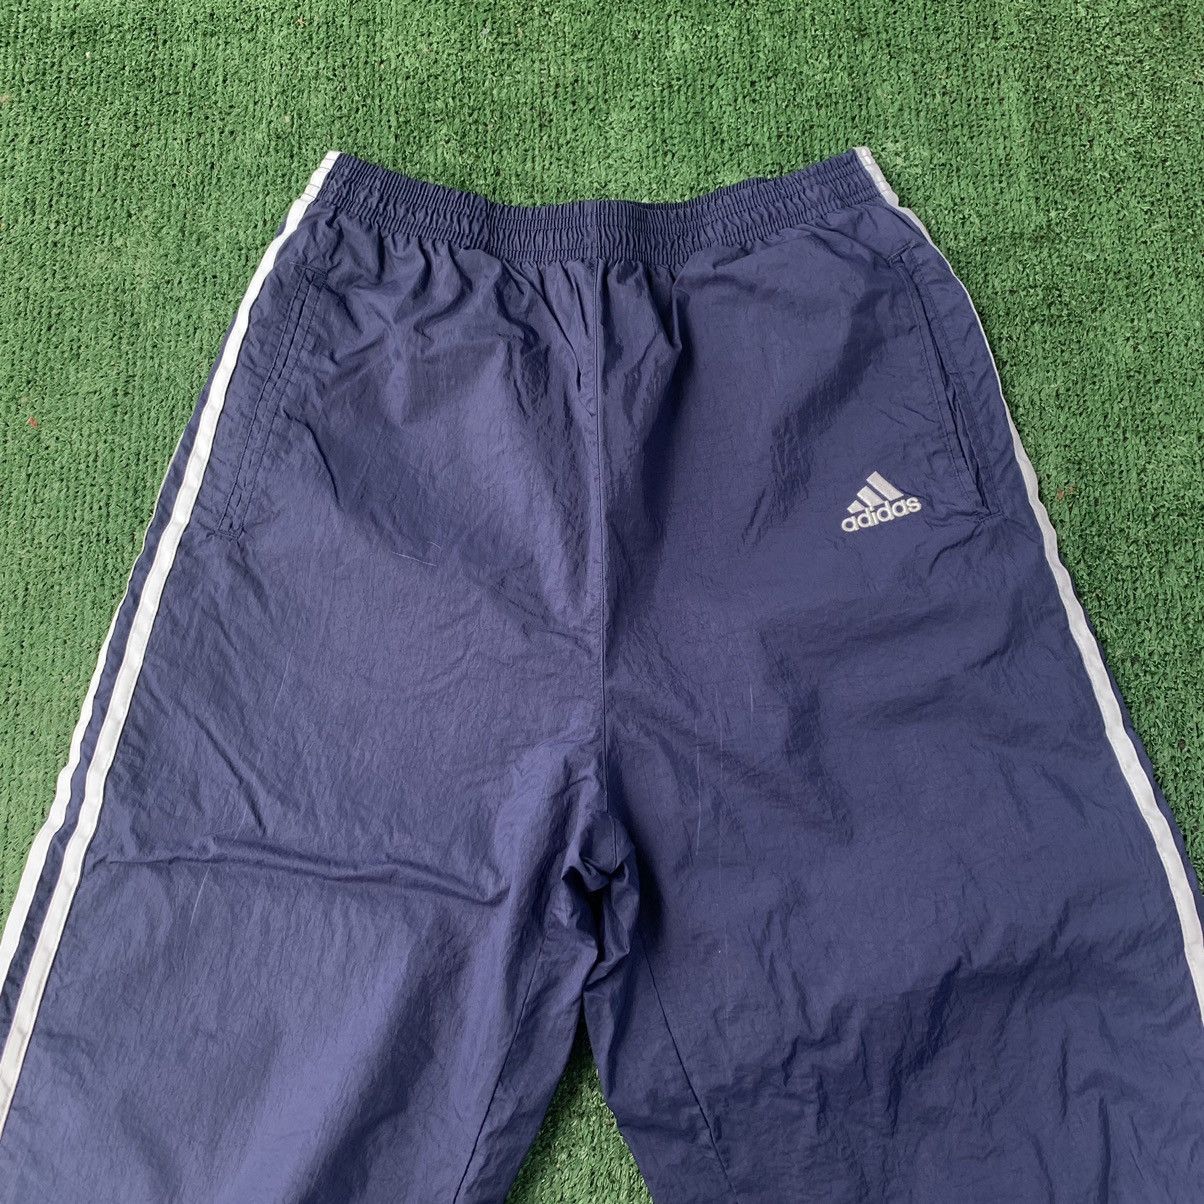 Adidas Vintage Adidas Track Pants Size US 32 / EU 48 - 3 Thumbnail